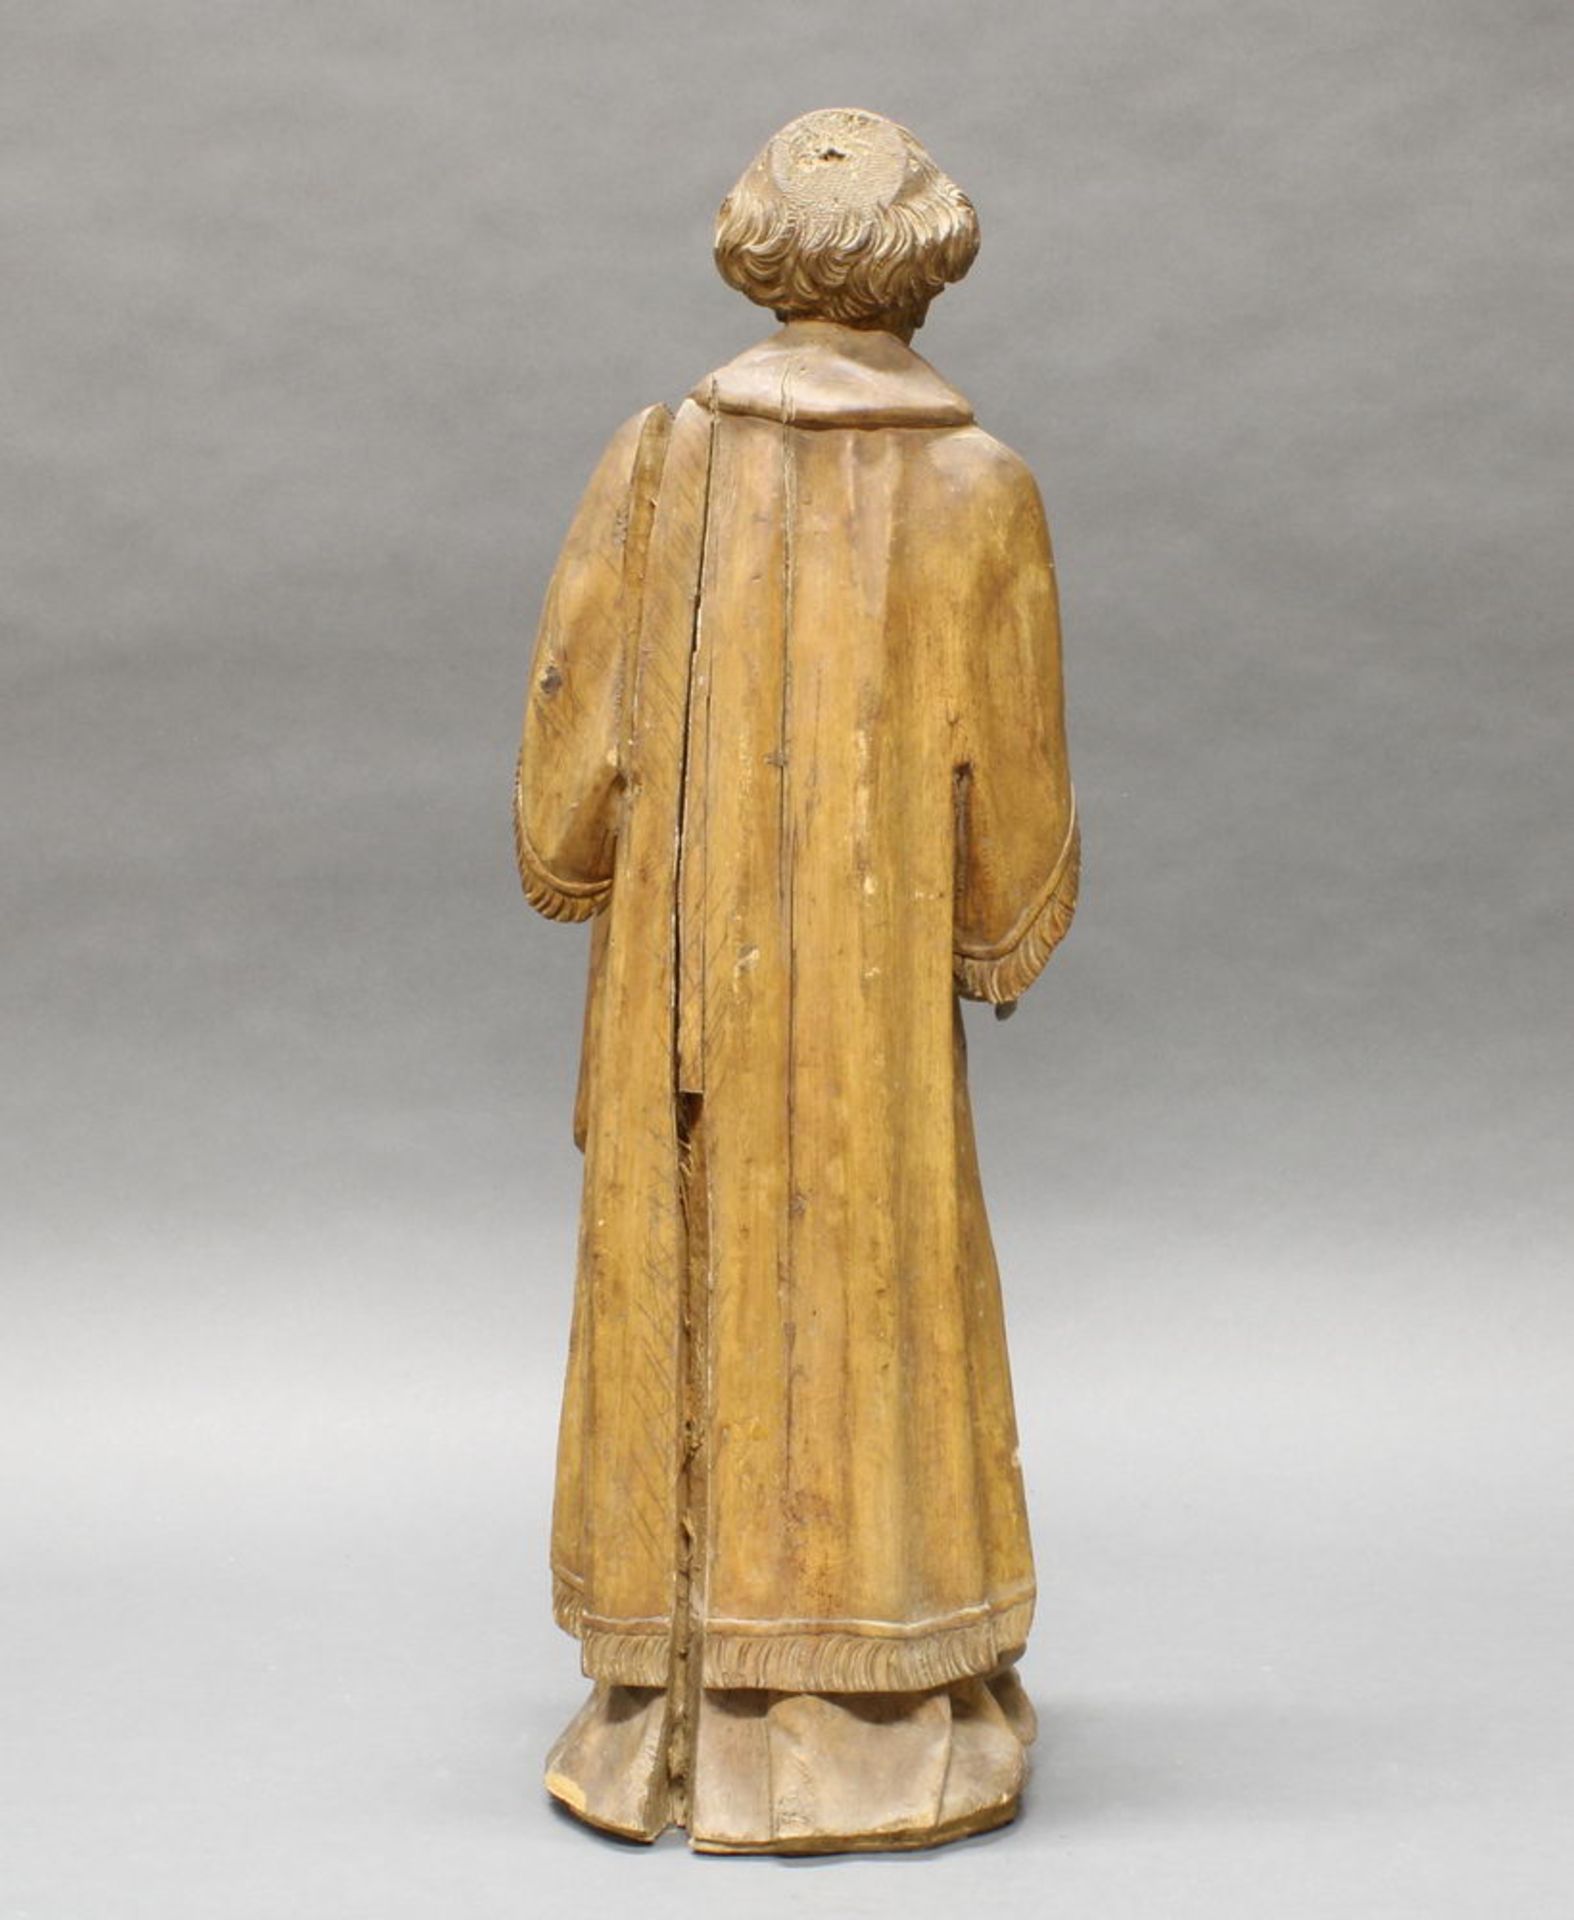 Skulptur, Holz geschnitzt, "Hl. Stephanus", wohl Anfang 16. Jh., 64 cm hoch, verso vertikal gerisse - Image 2 of 2